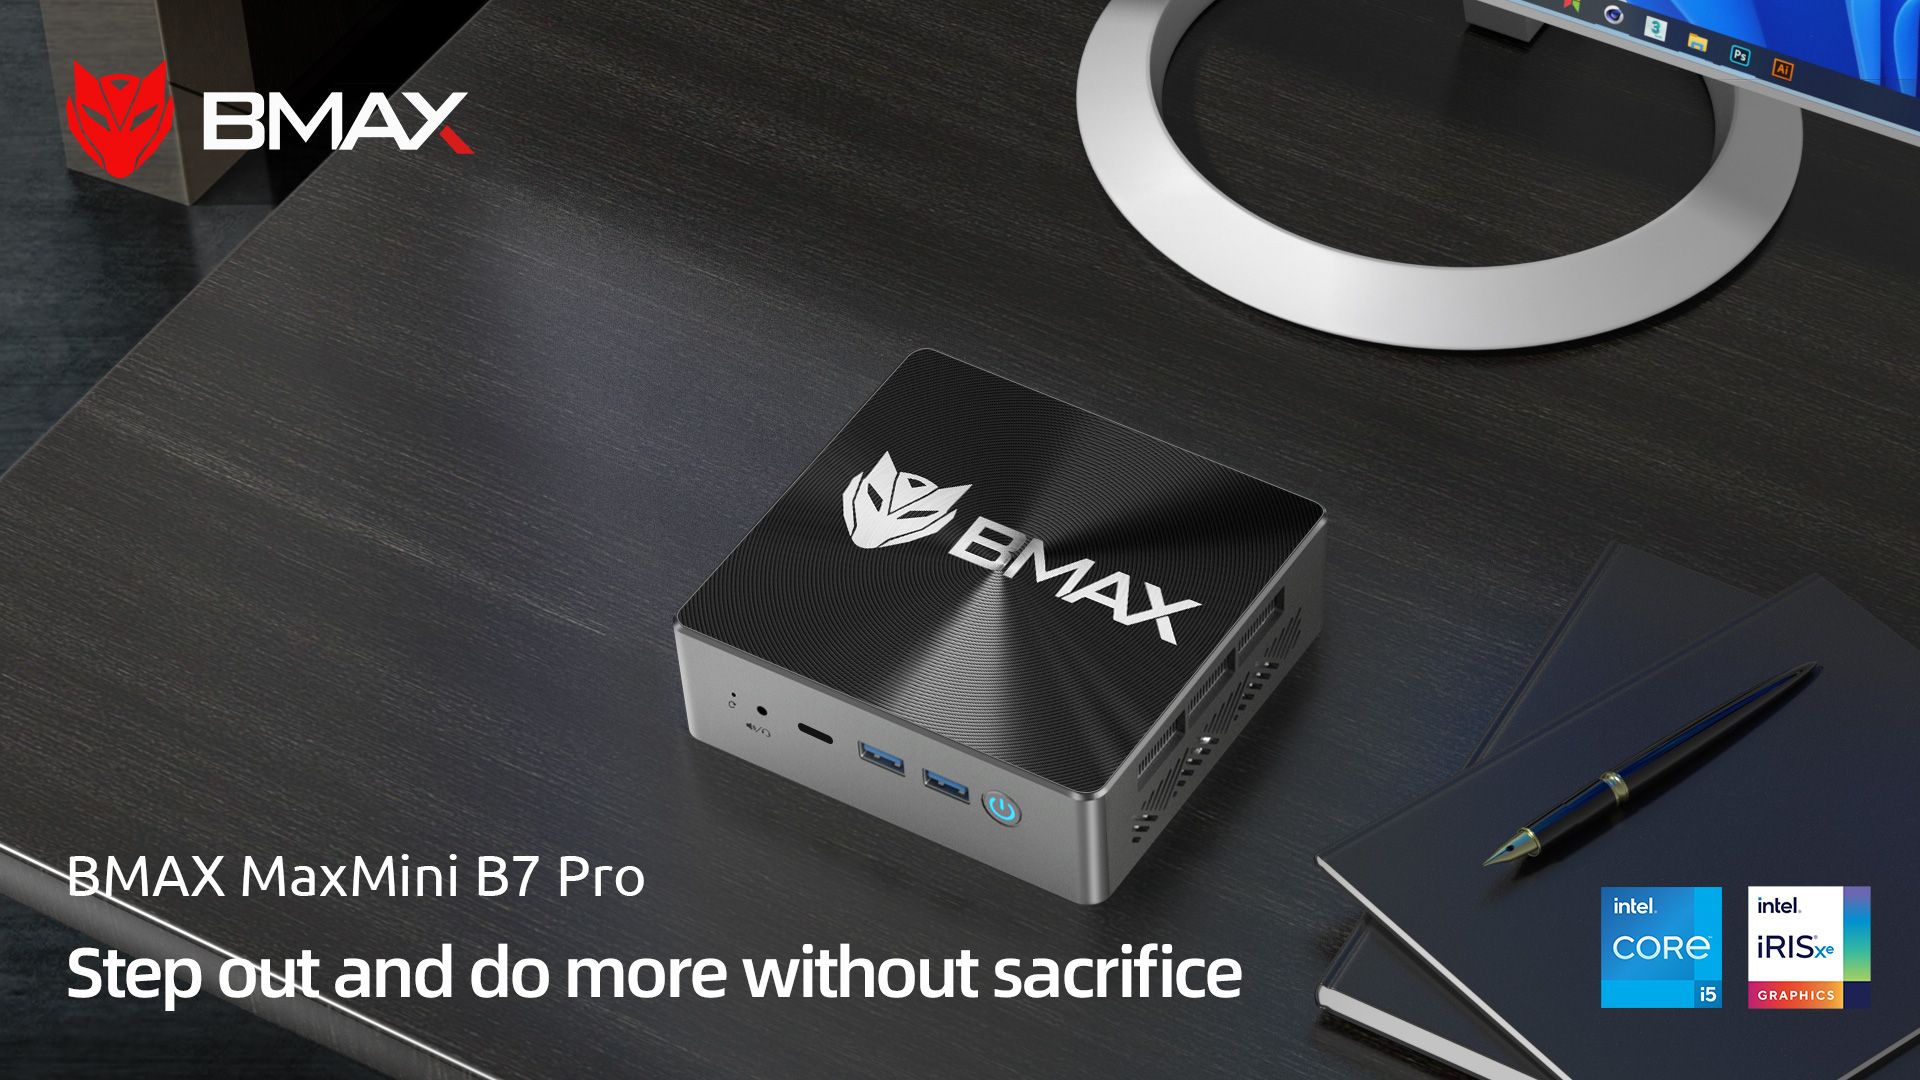 Maxmini B7 Pro - Buy B7 Pro, Intel i5, Business Product on BMAX